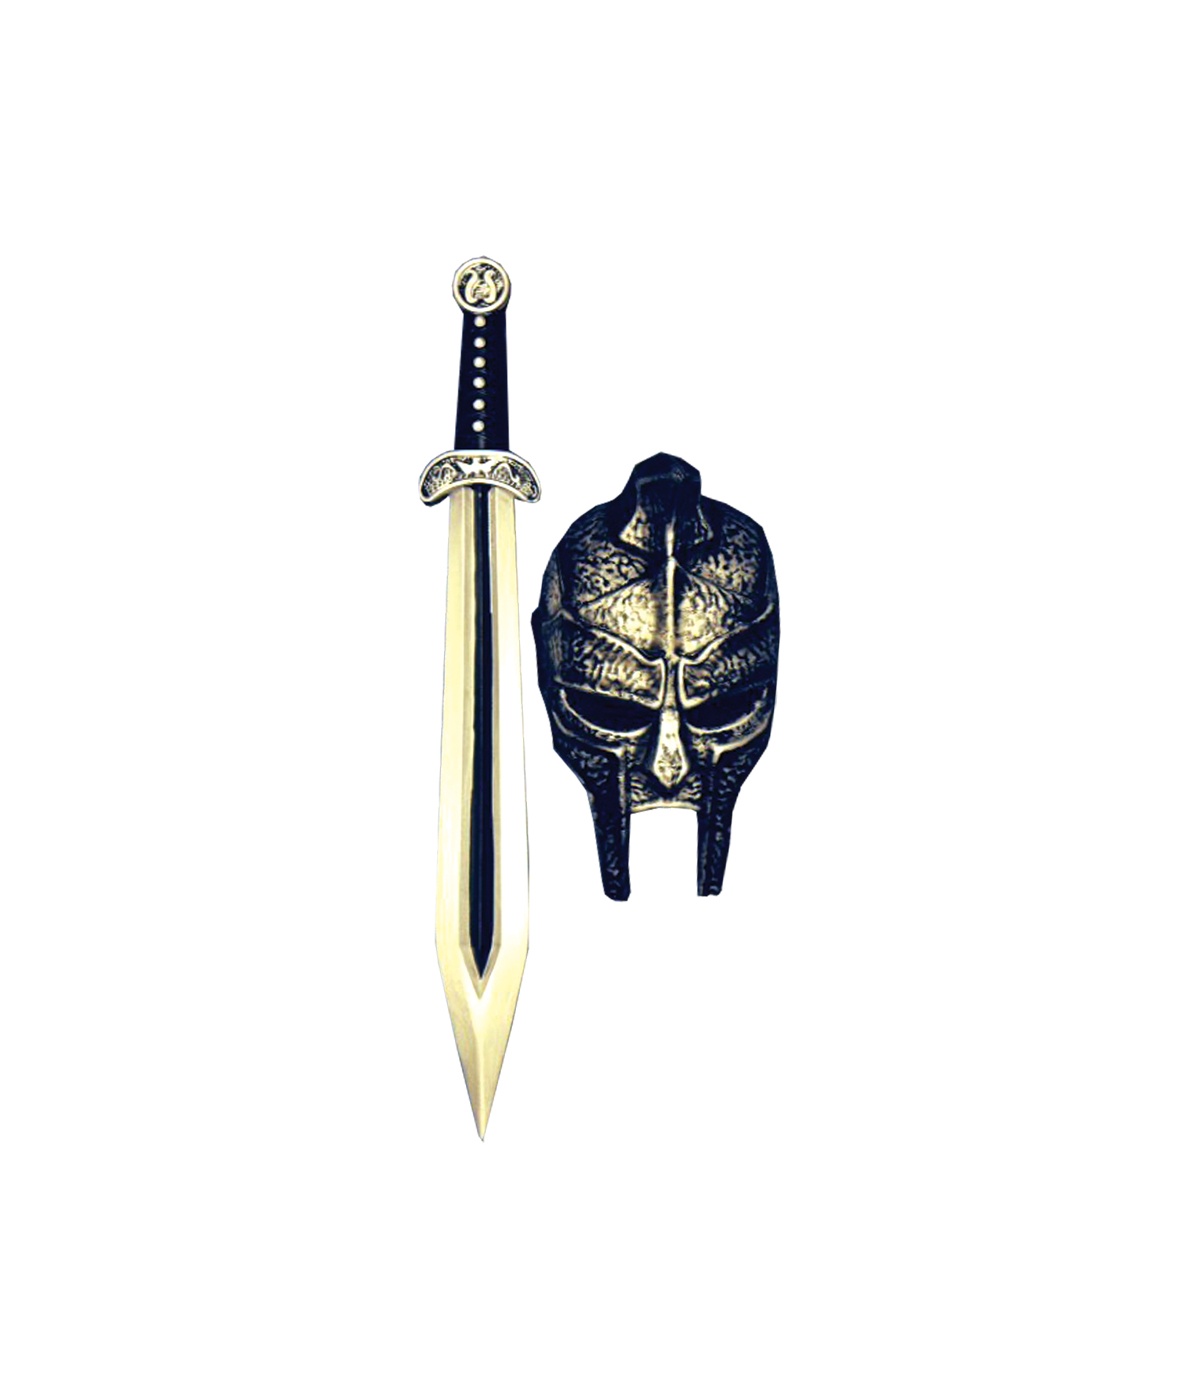  Gladiator Mask Sword Costume Set